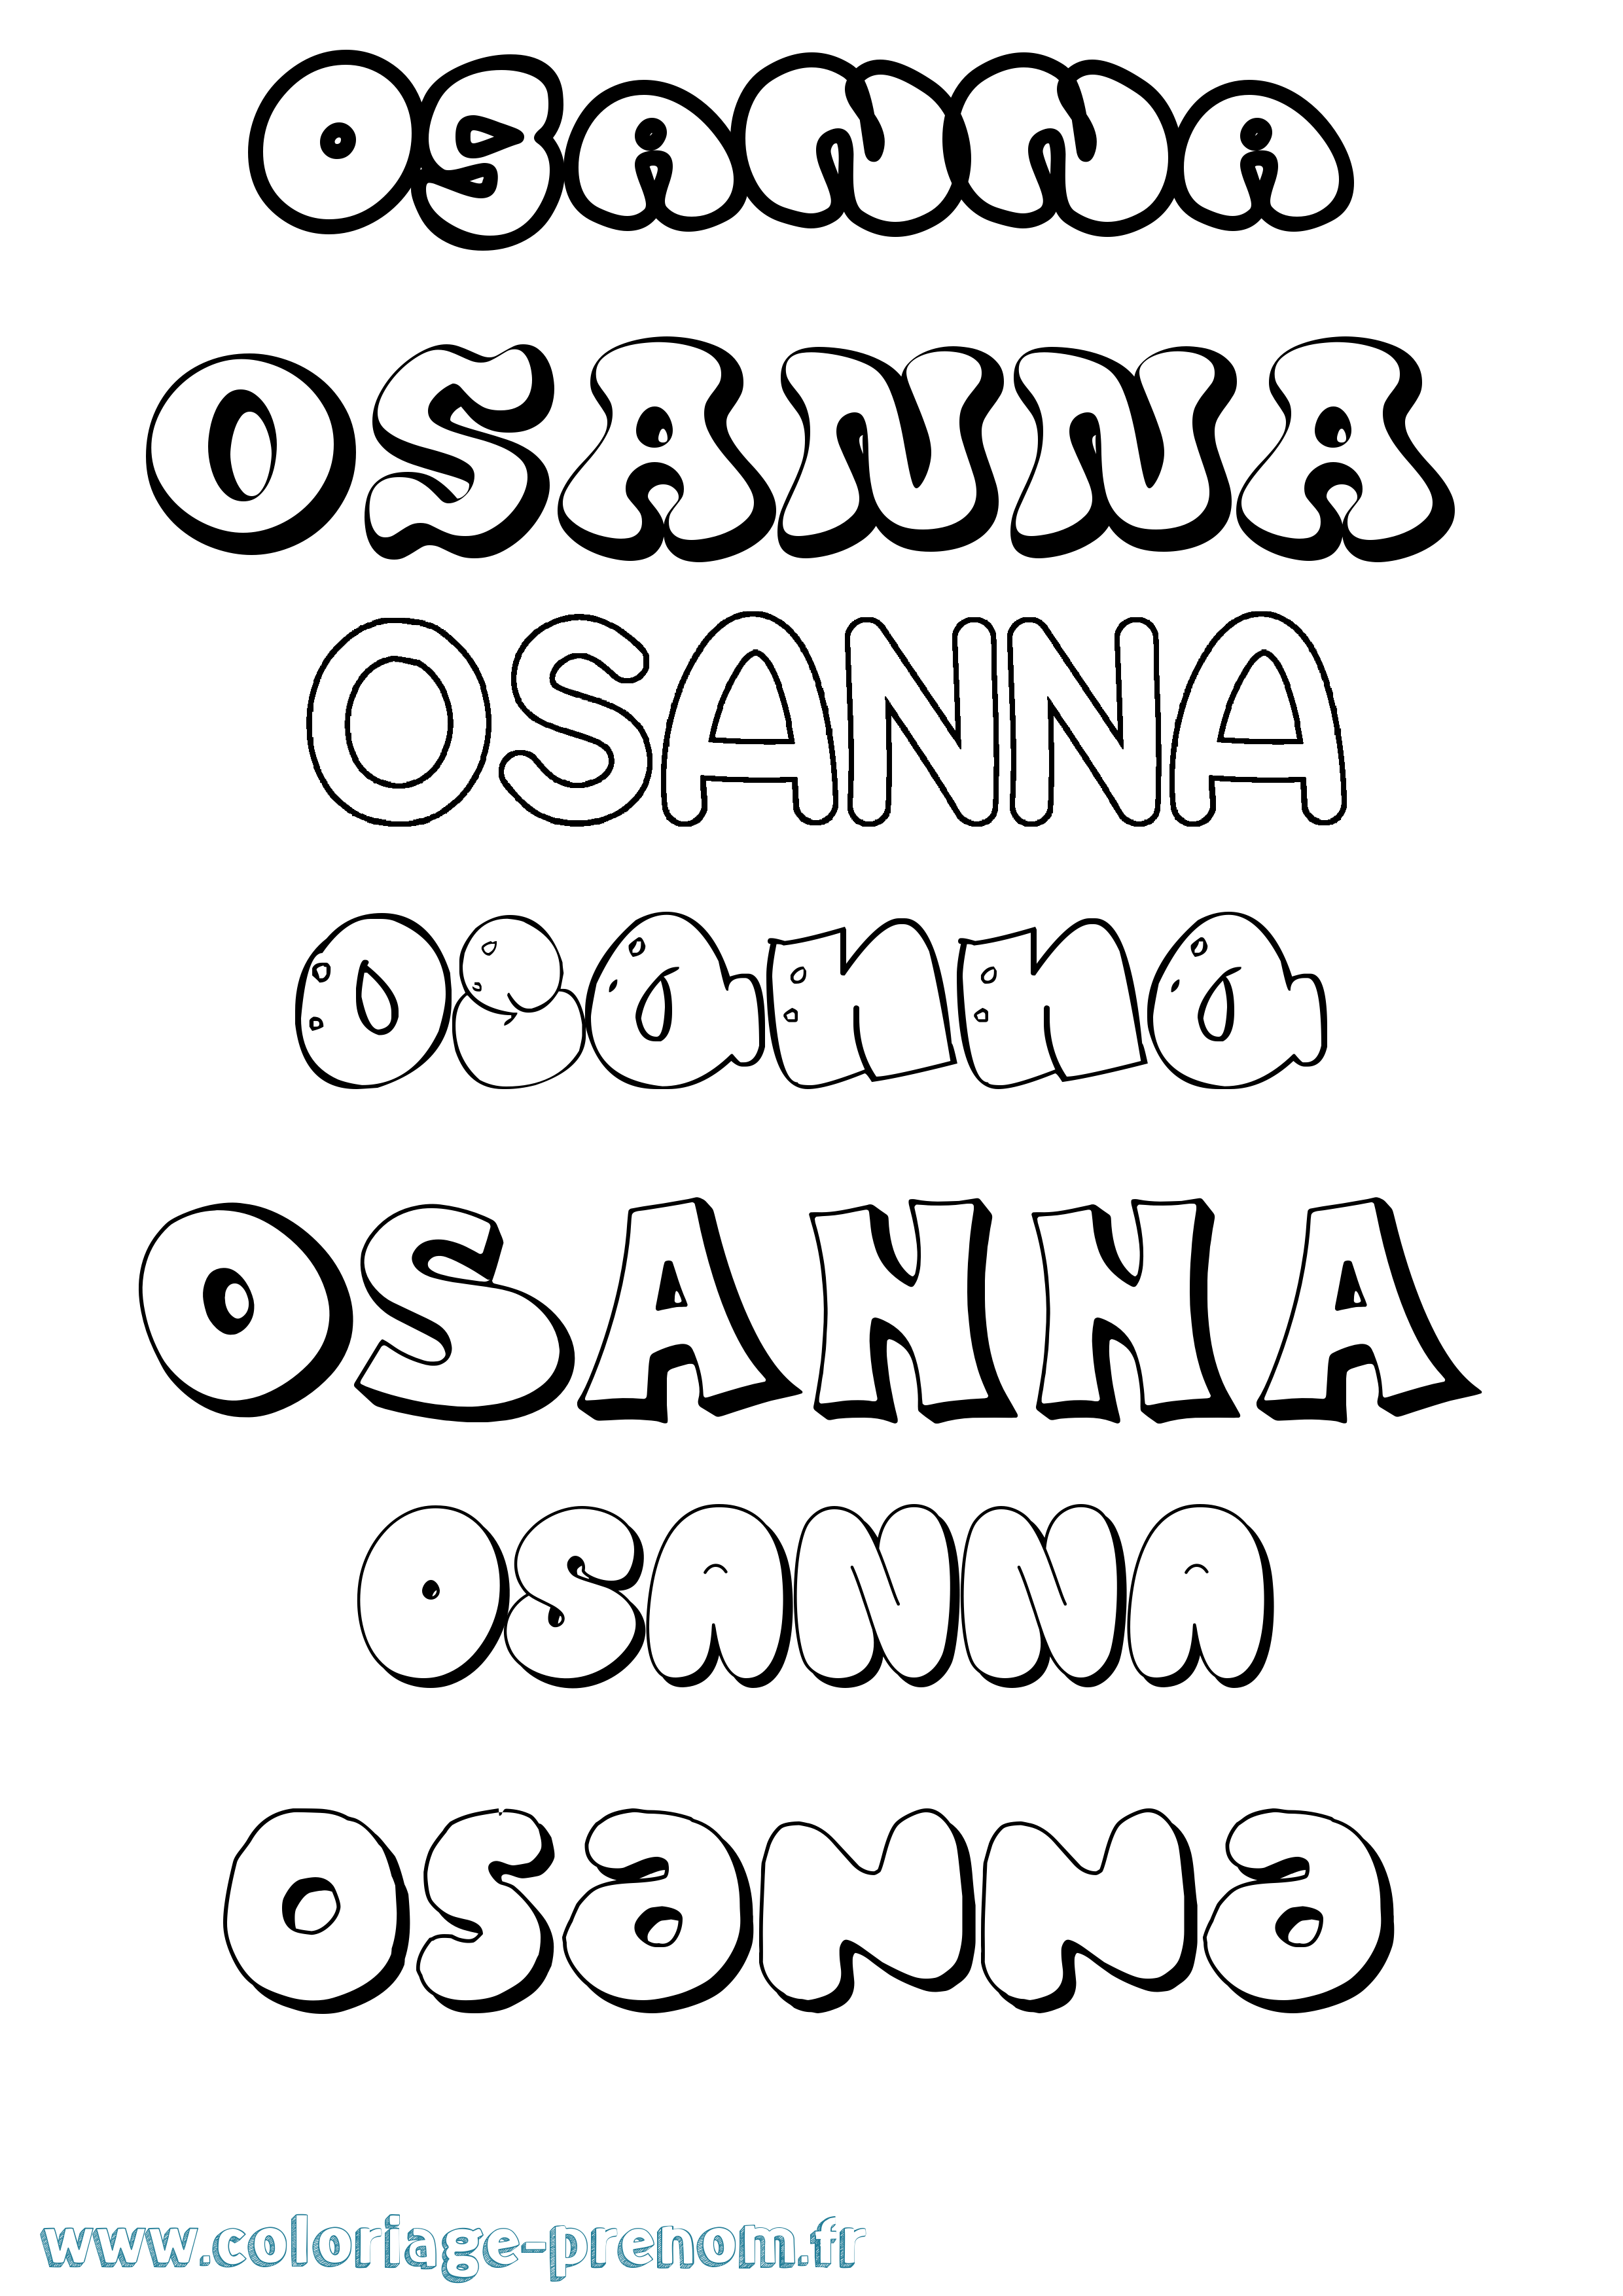 Coloriage prénom Osanna Bubble